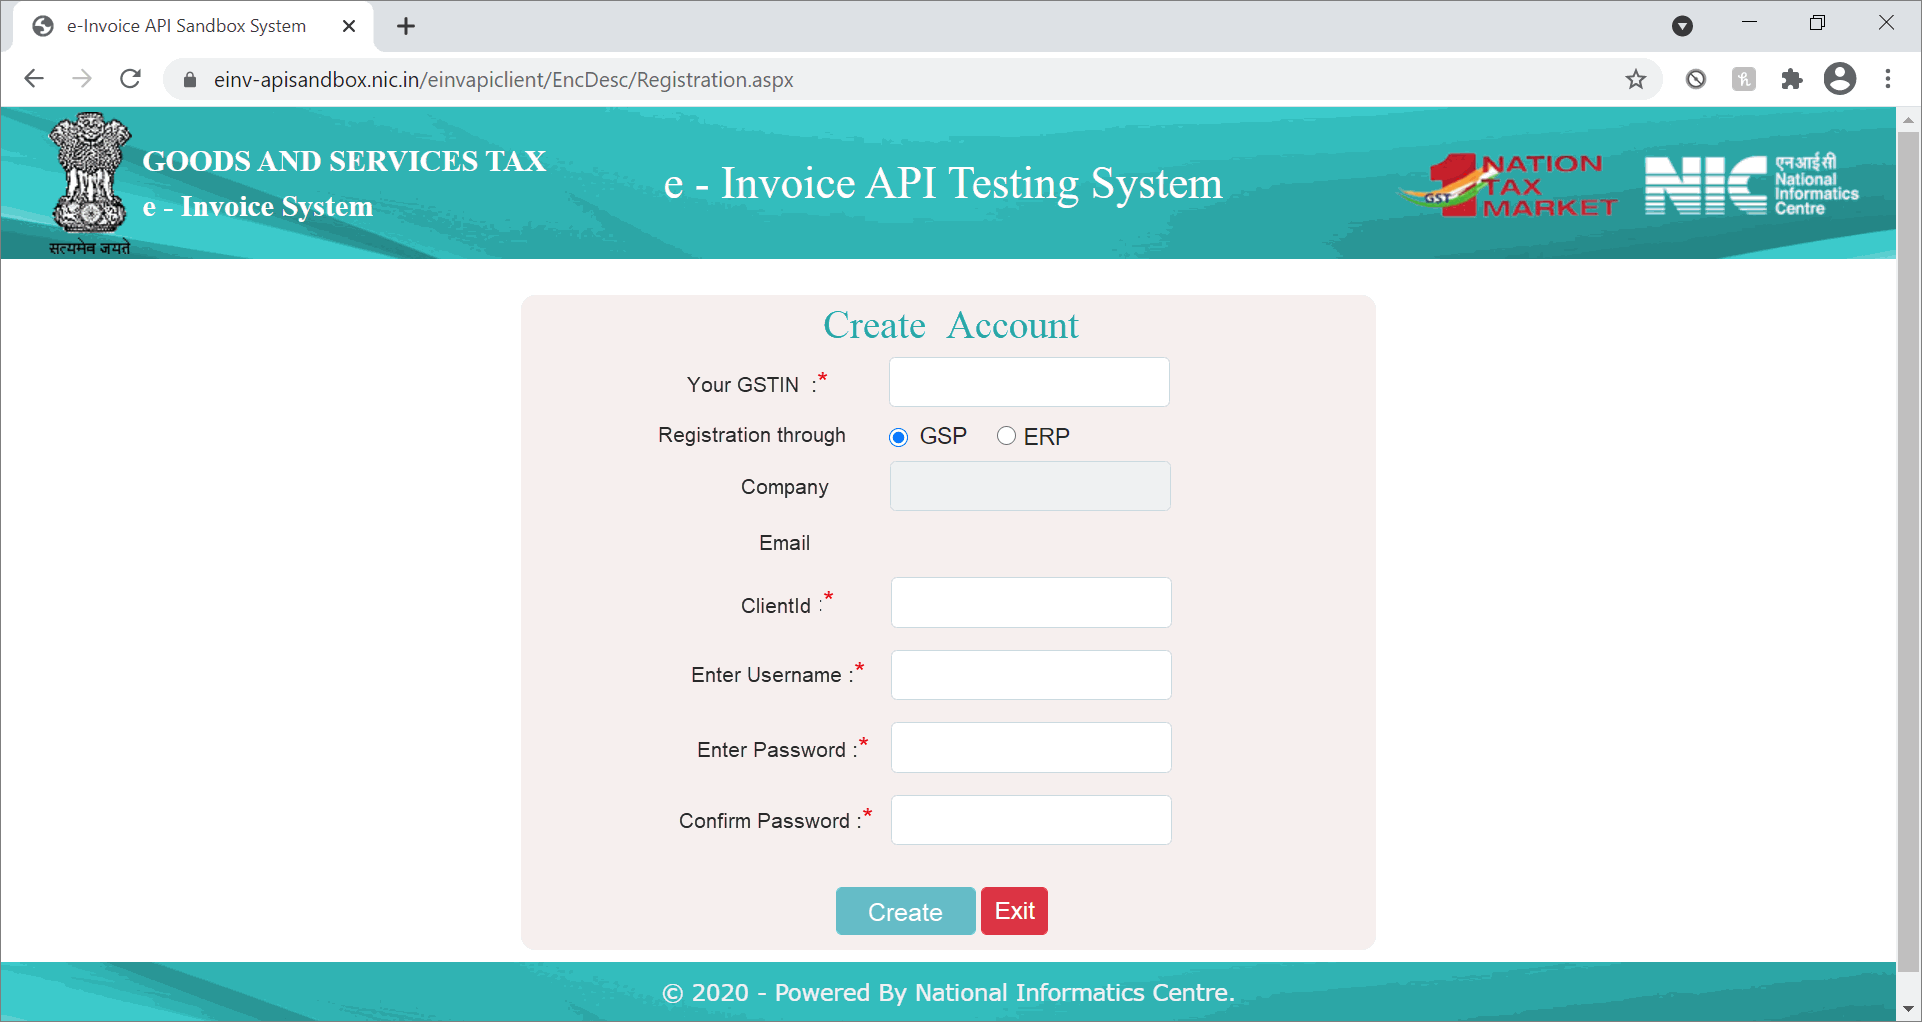 The Create Account Screen